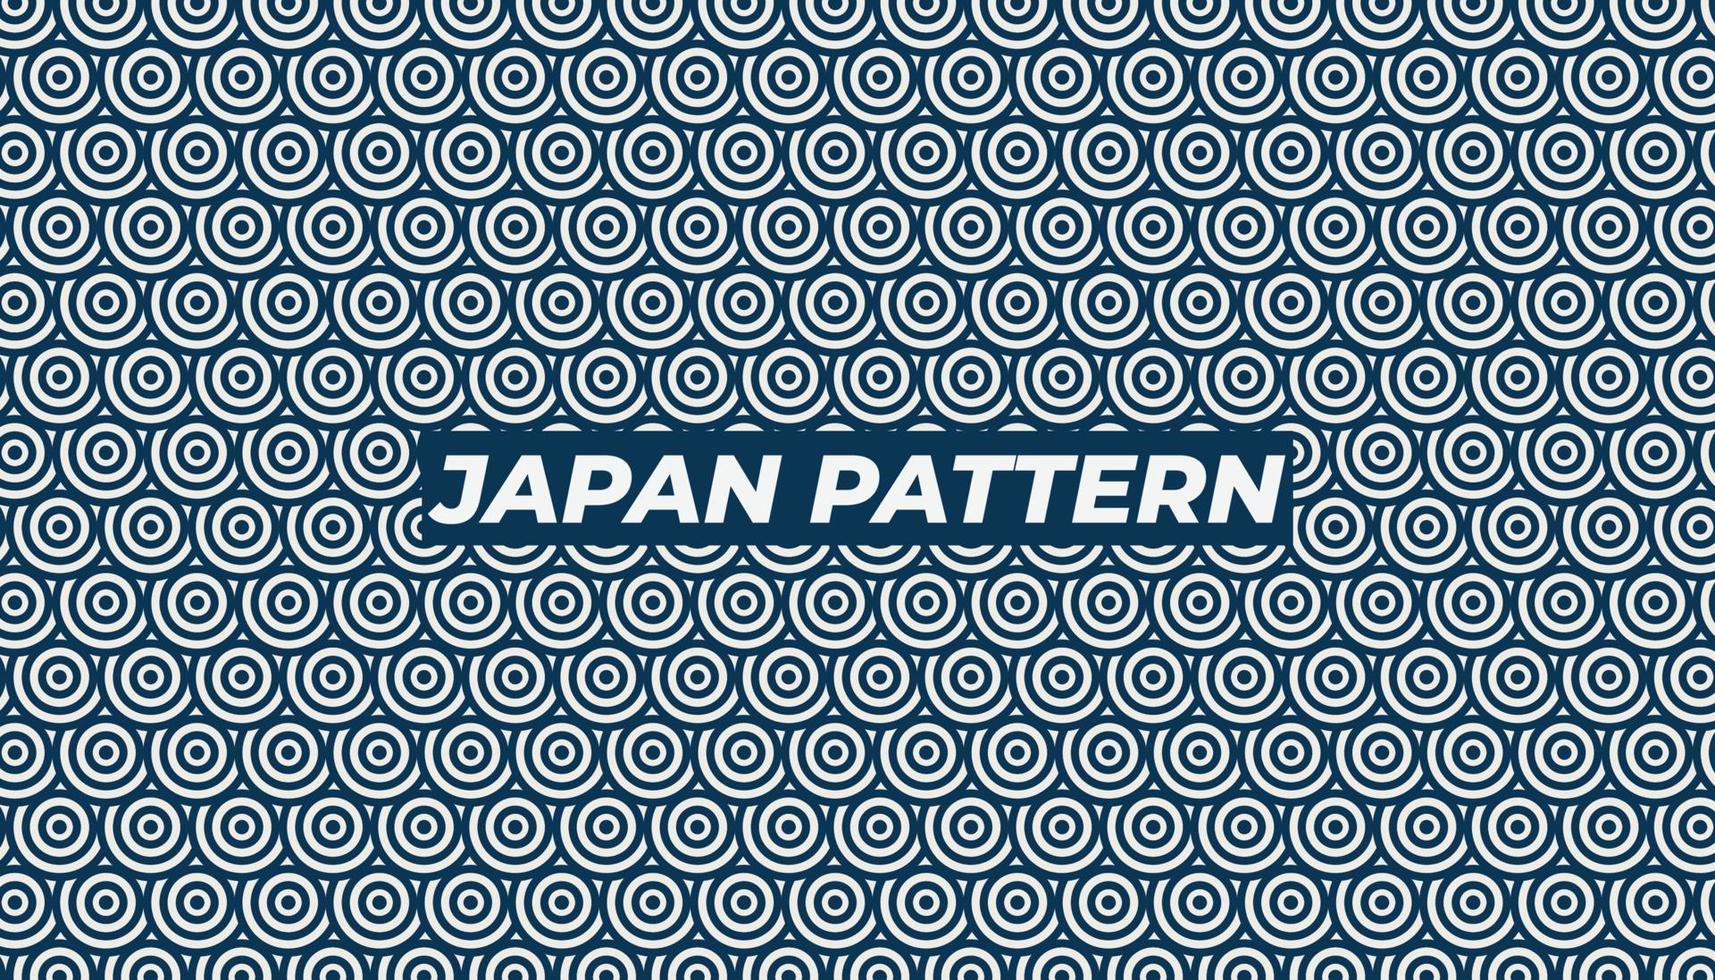 Abbildung Hintergrund jappan patern blaue Farbe vektor